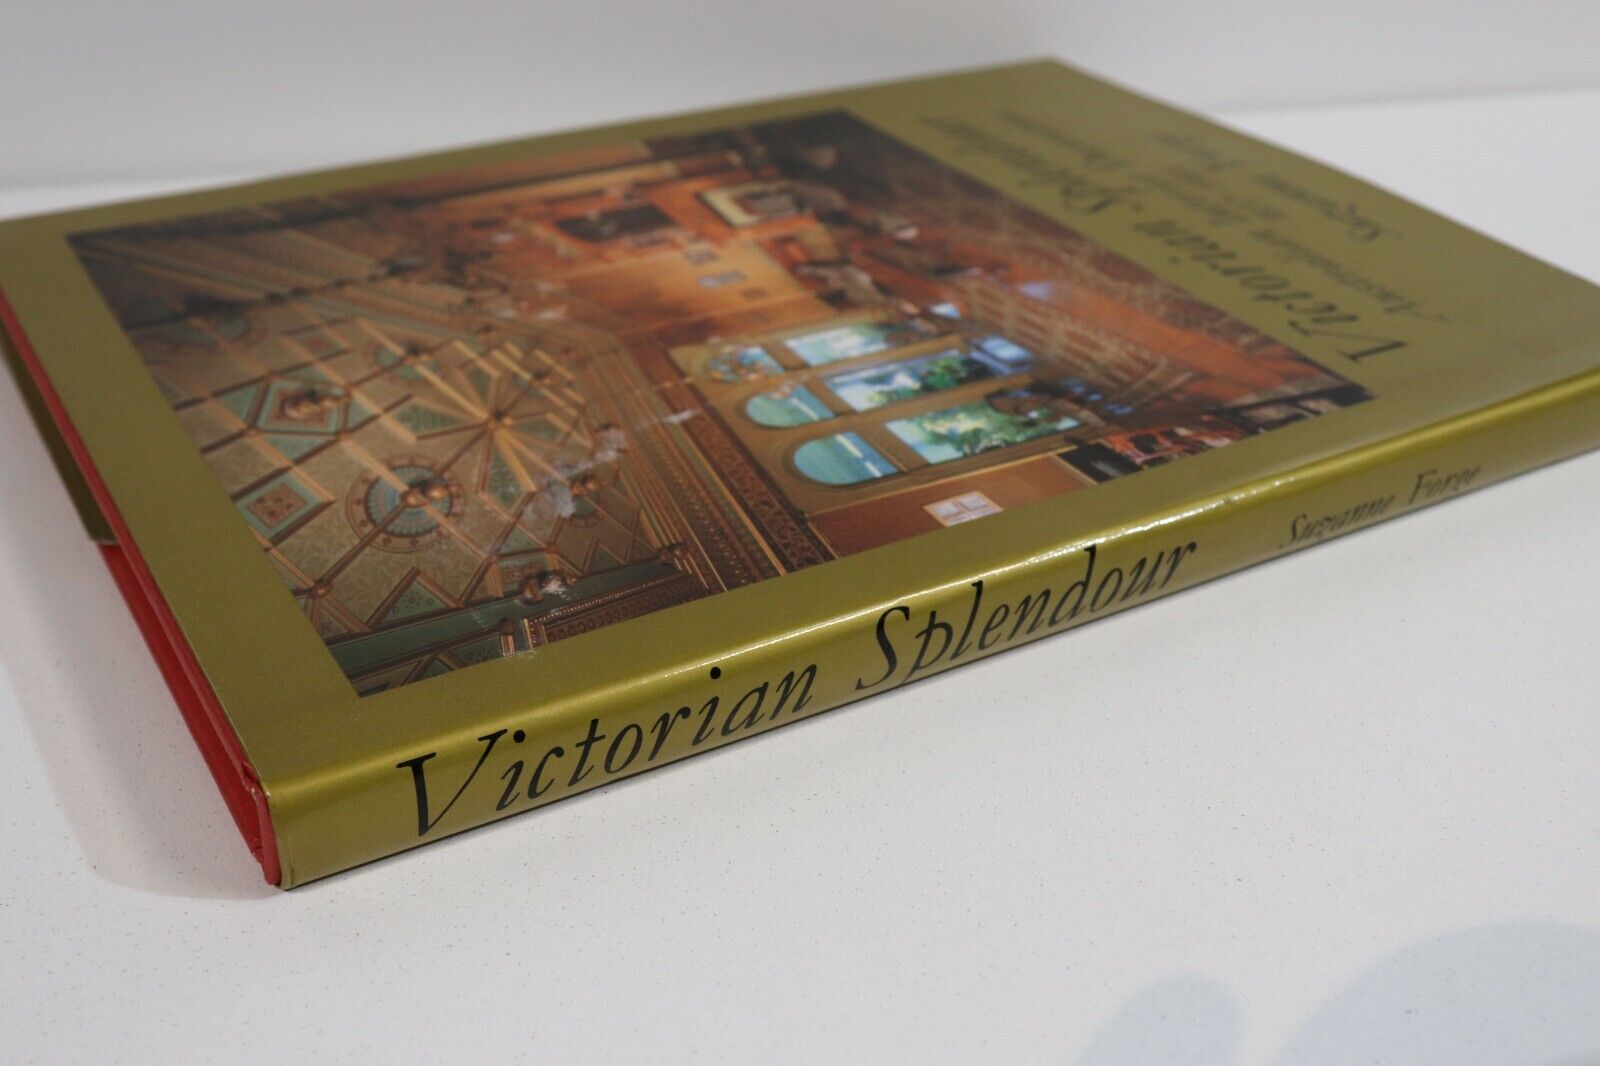 Victorian Splendour by Suzanne Forge - 1981 - Australian Interior Design Book